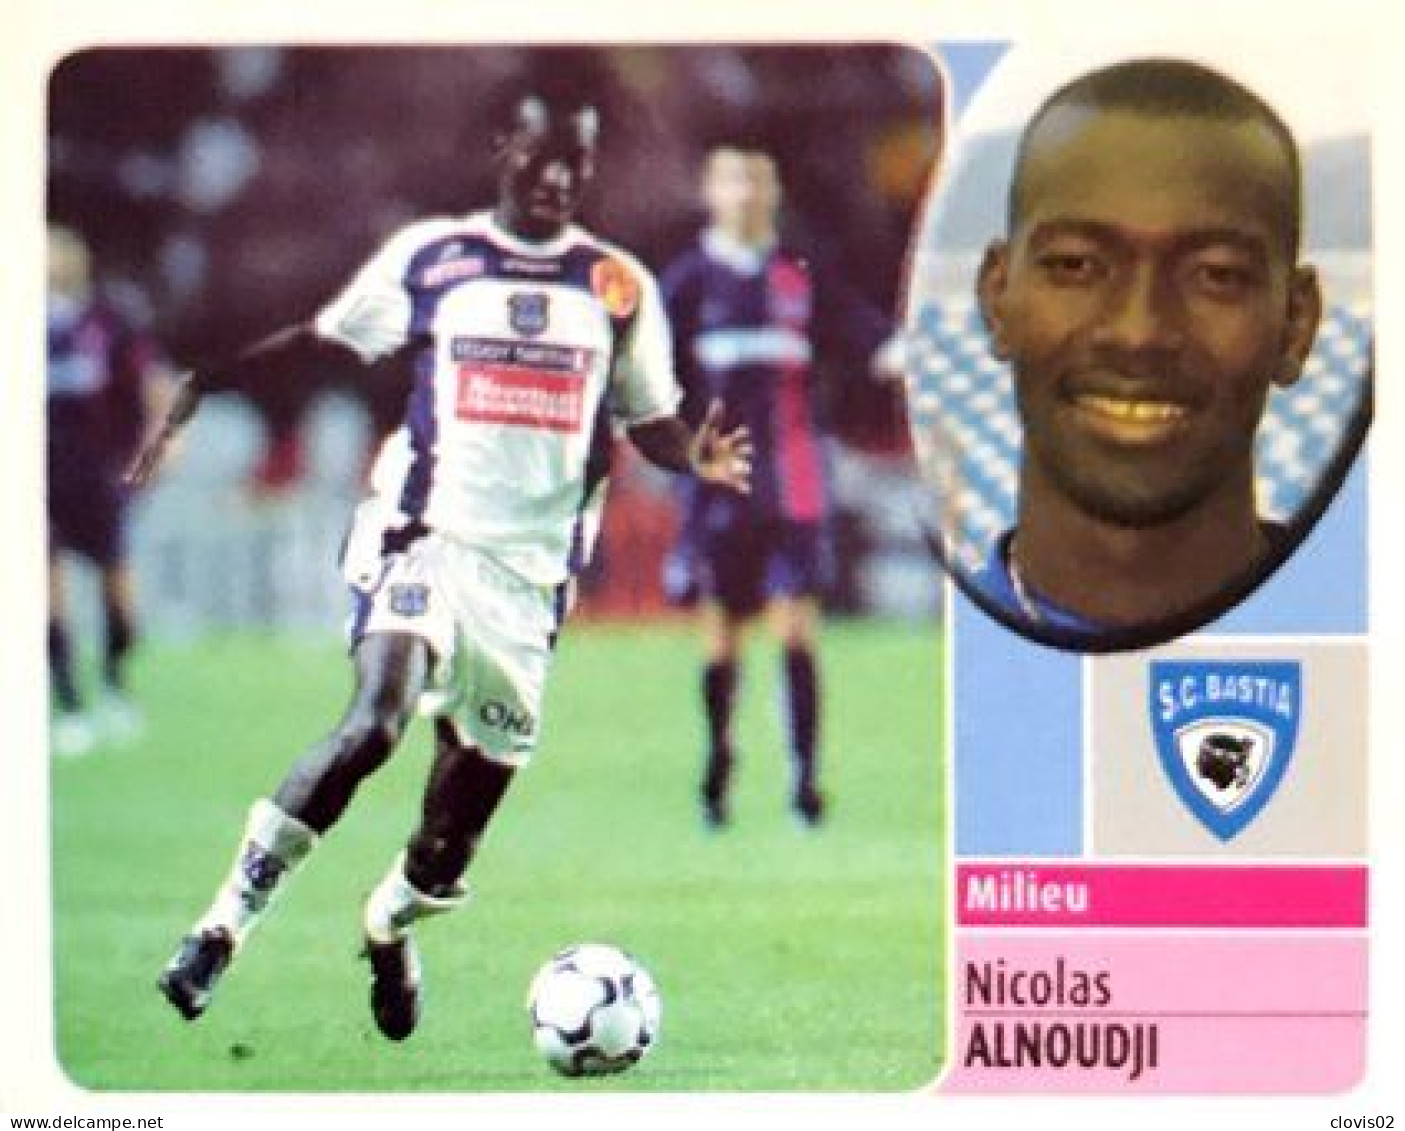 36 Nicolas Alnoudji - SC Bastia - Panini France Foot 2003 Sticker Vignette - Edizione Francese